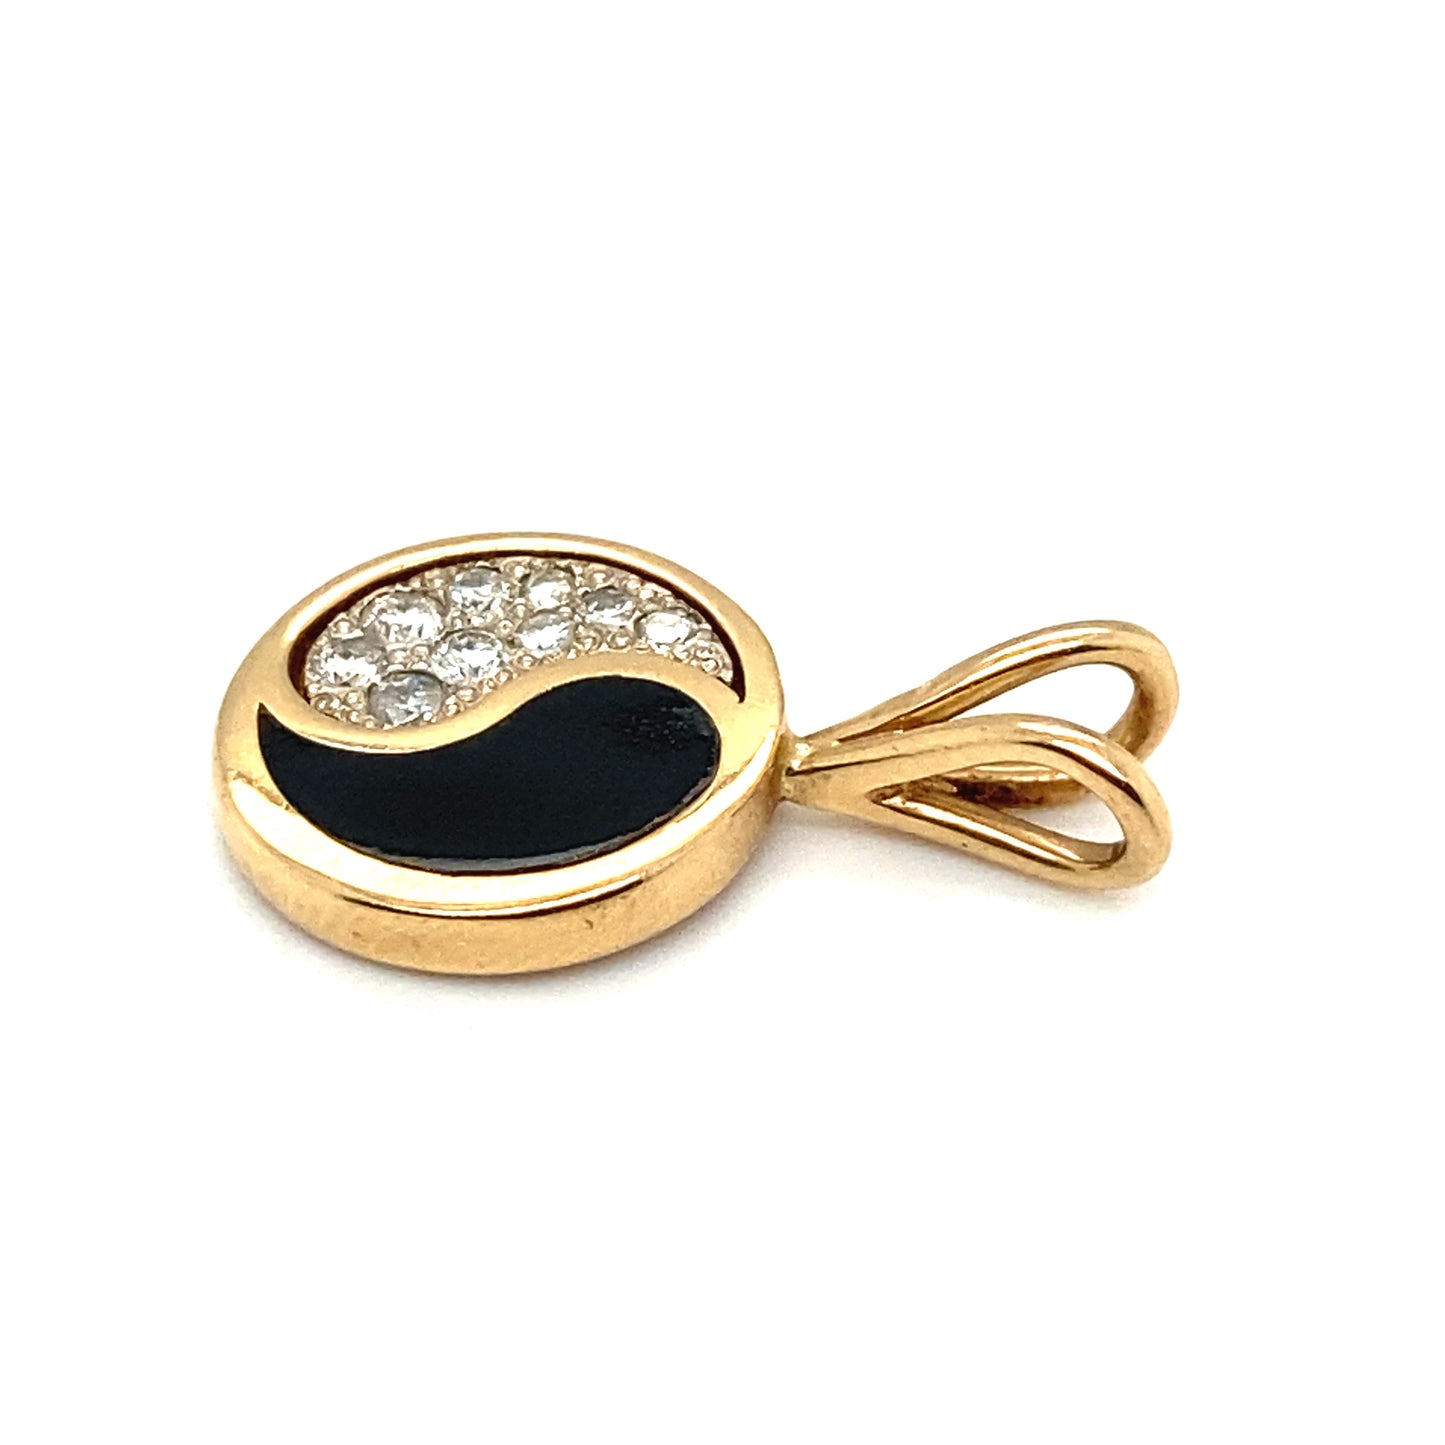 Hawaiian Black Coral and Diamond Yin-Yang Pendant in 14K Gold